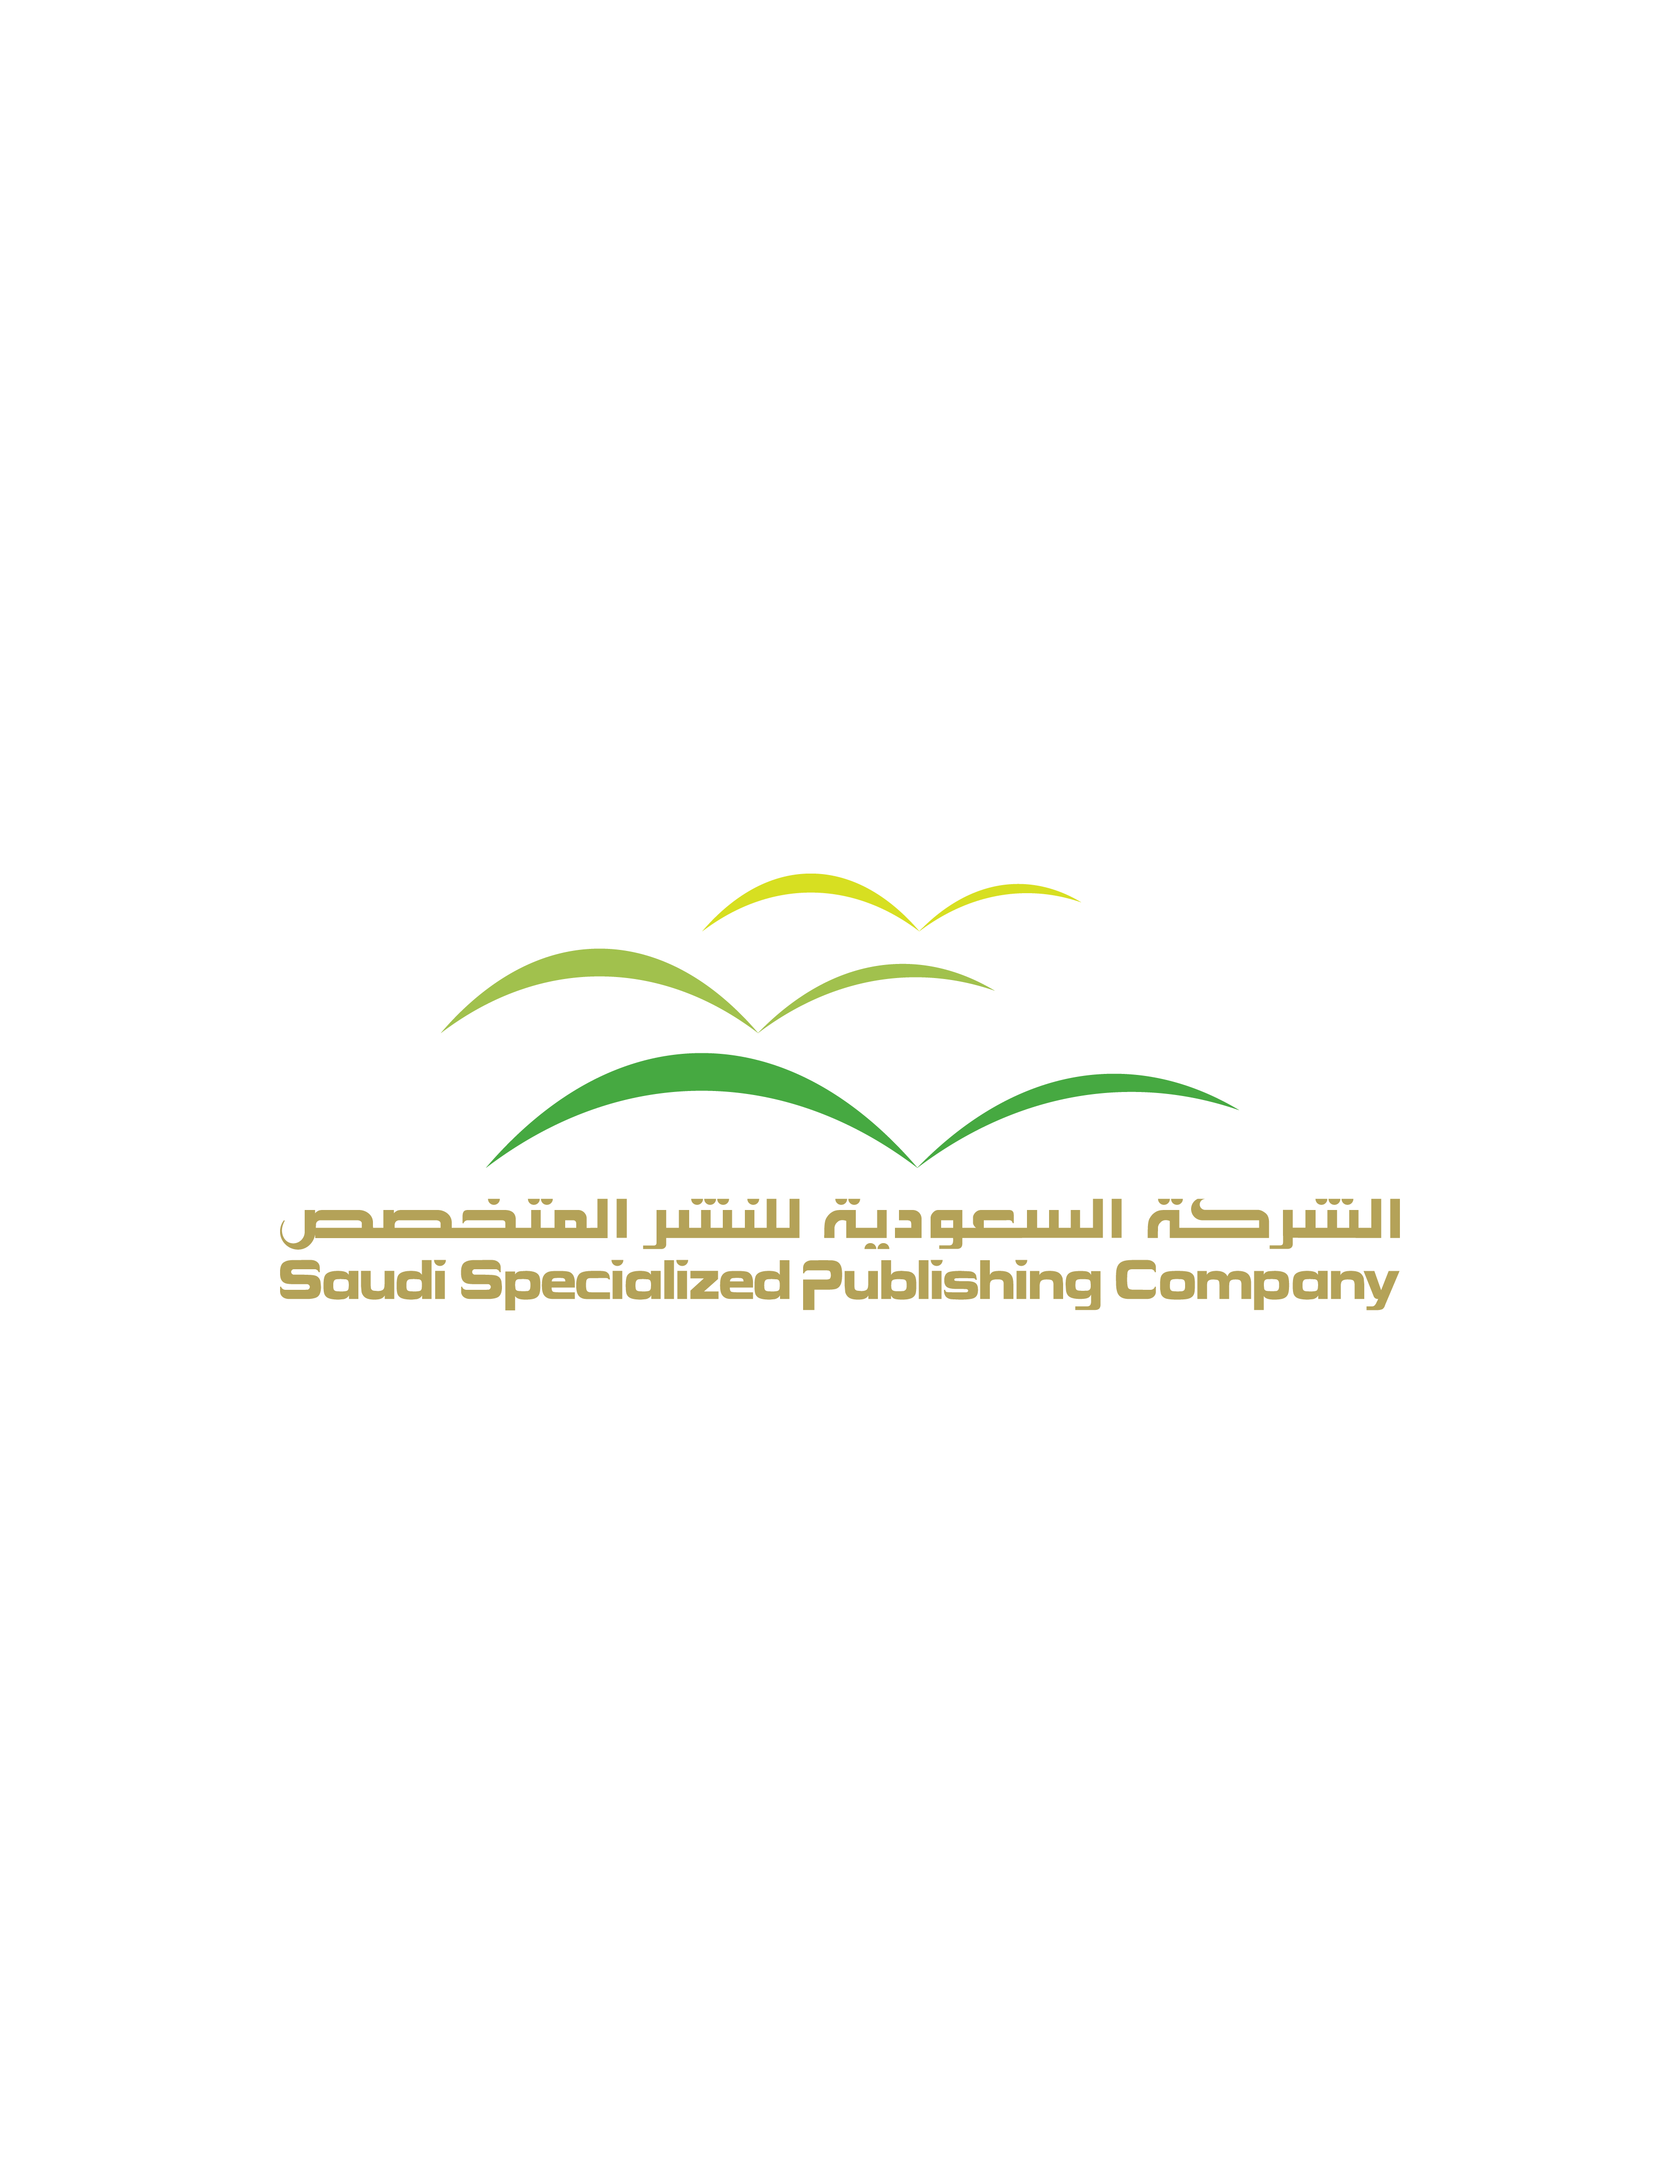 SSPC Saudi Specialized Publishing Company founded in Riyadh